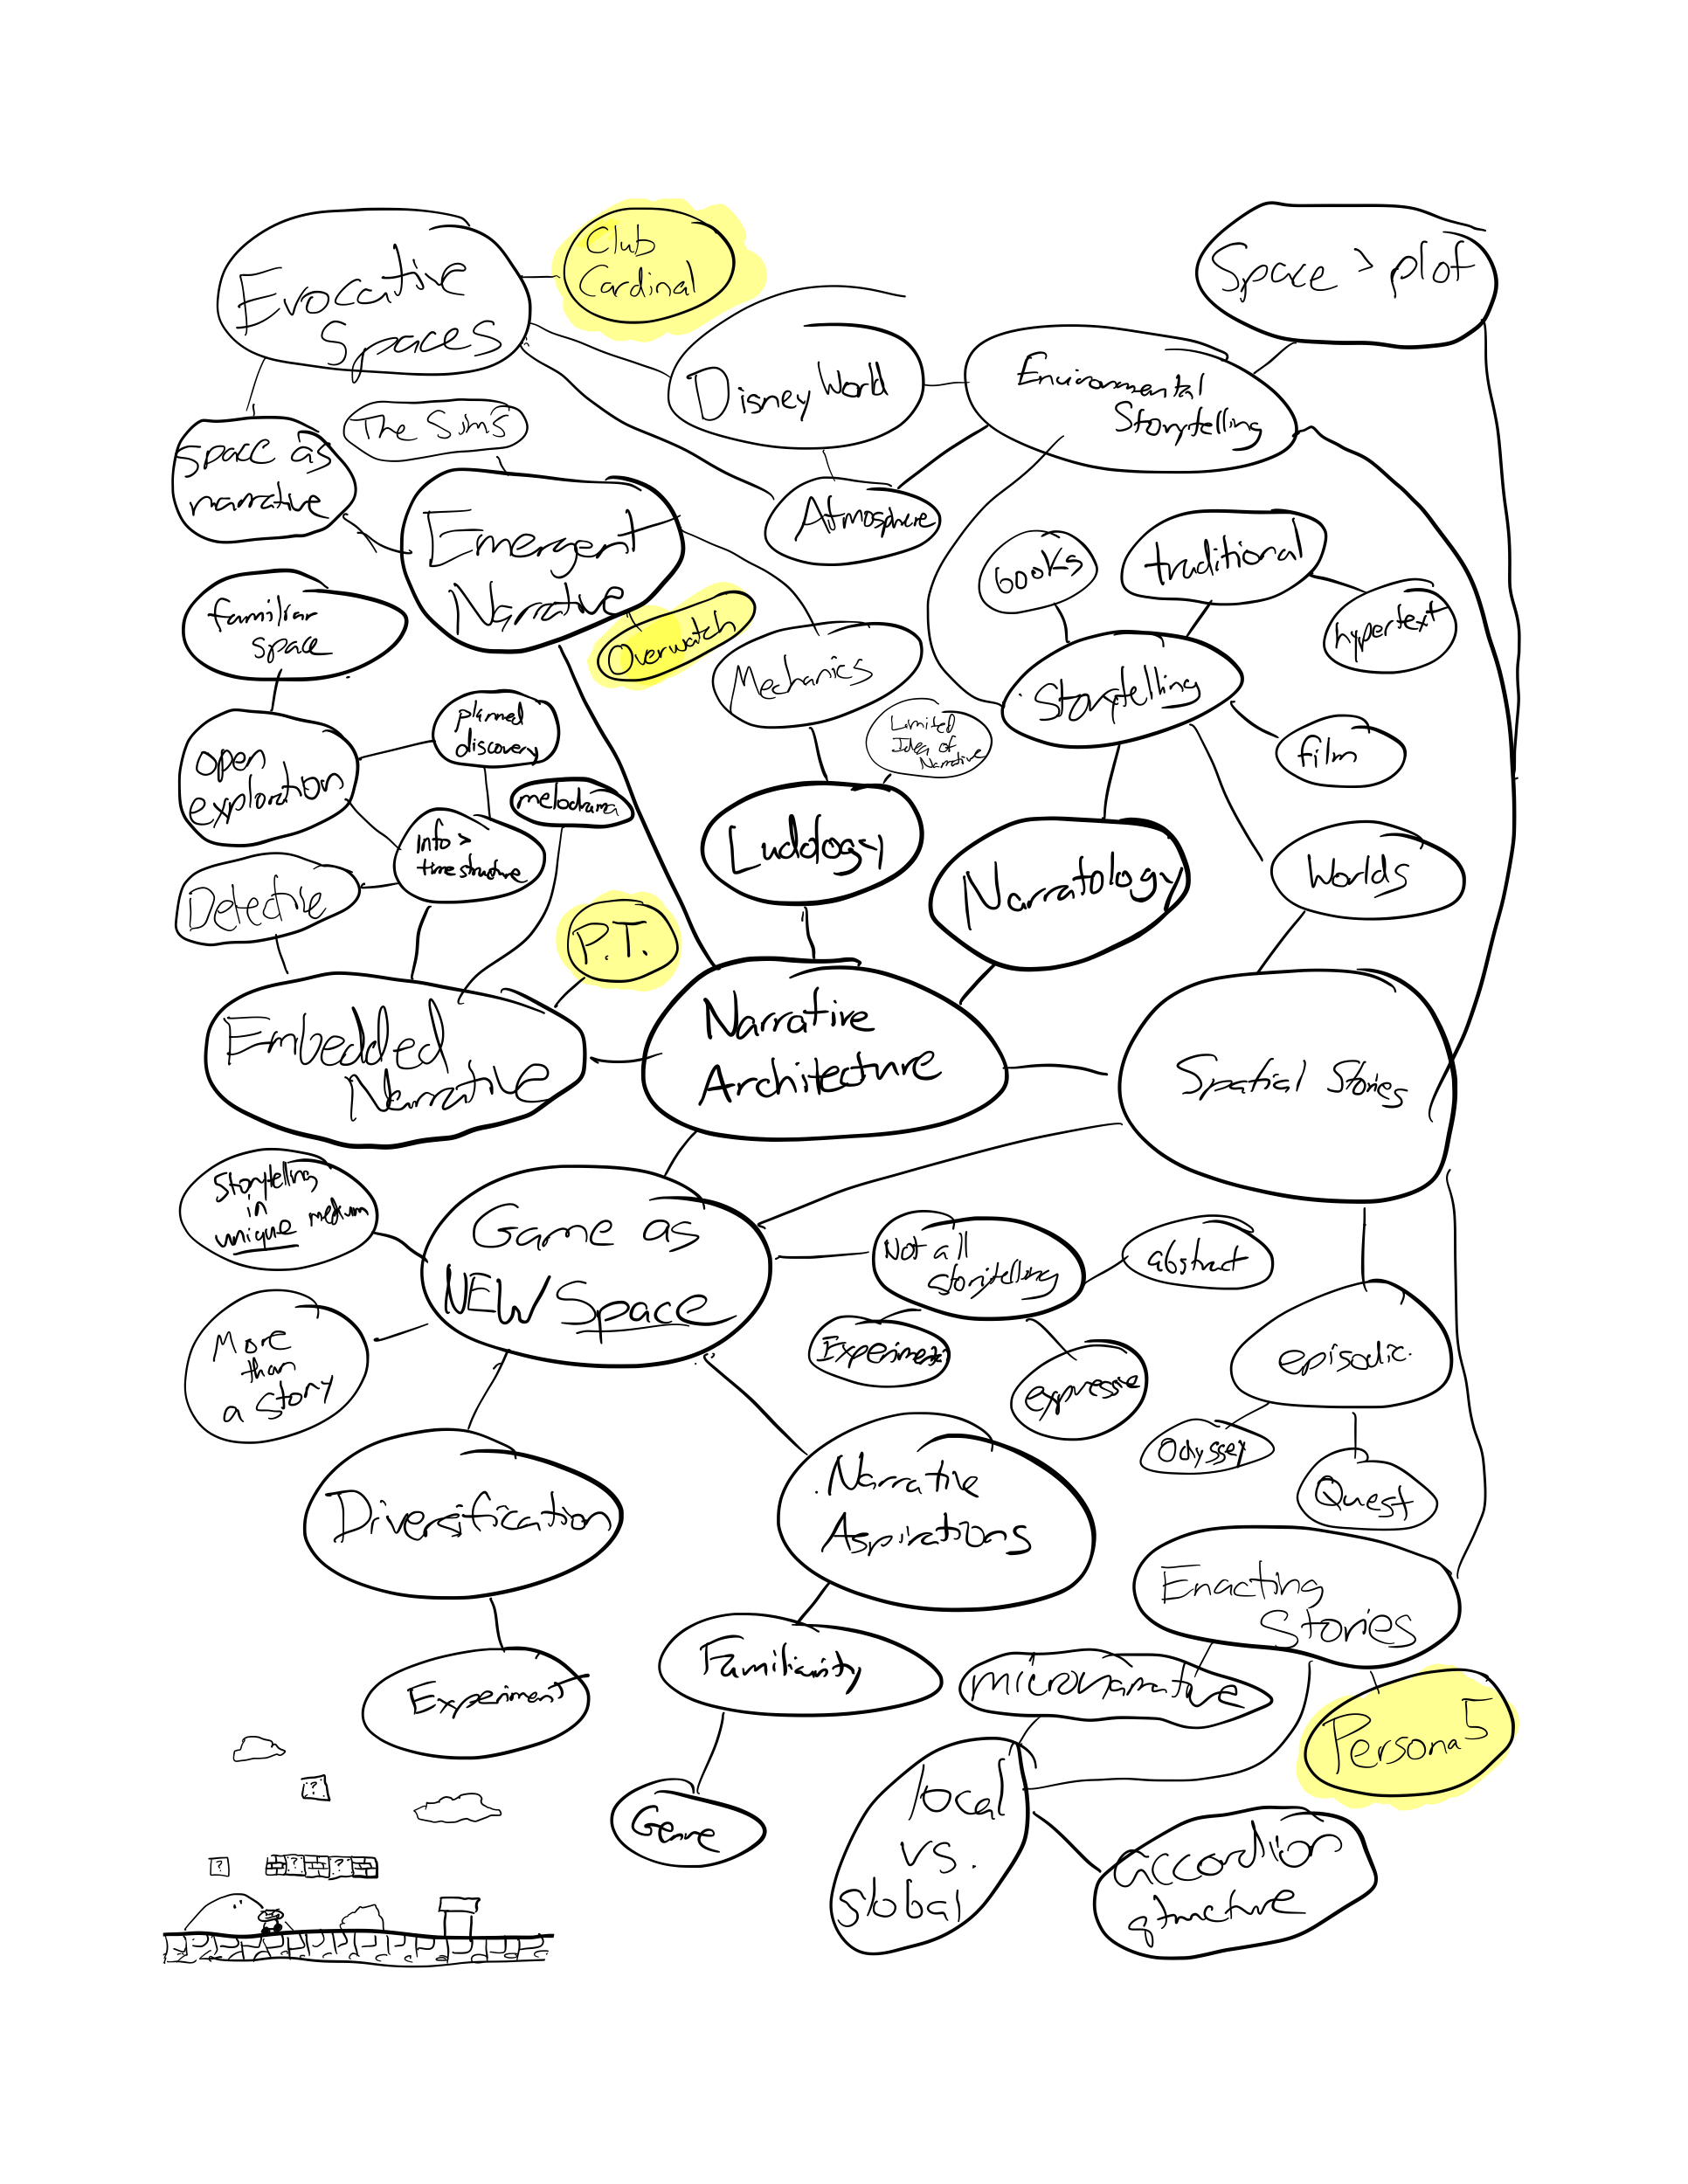 Mindmap of Narrative Architecture